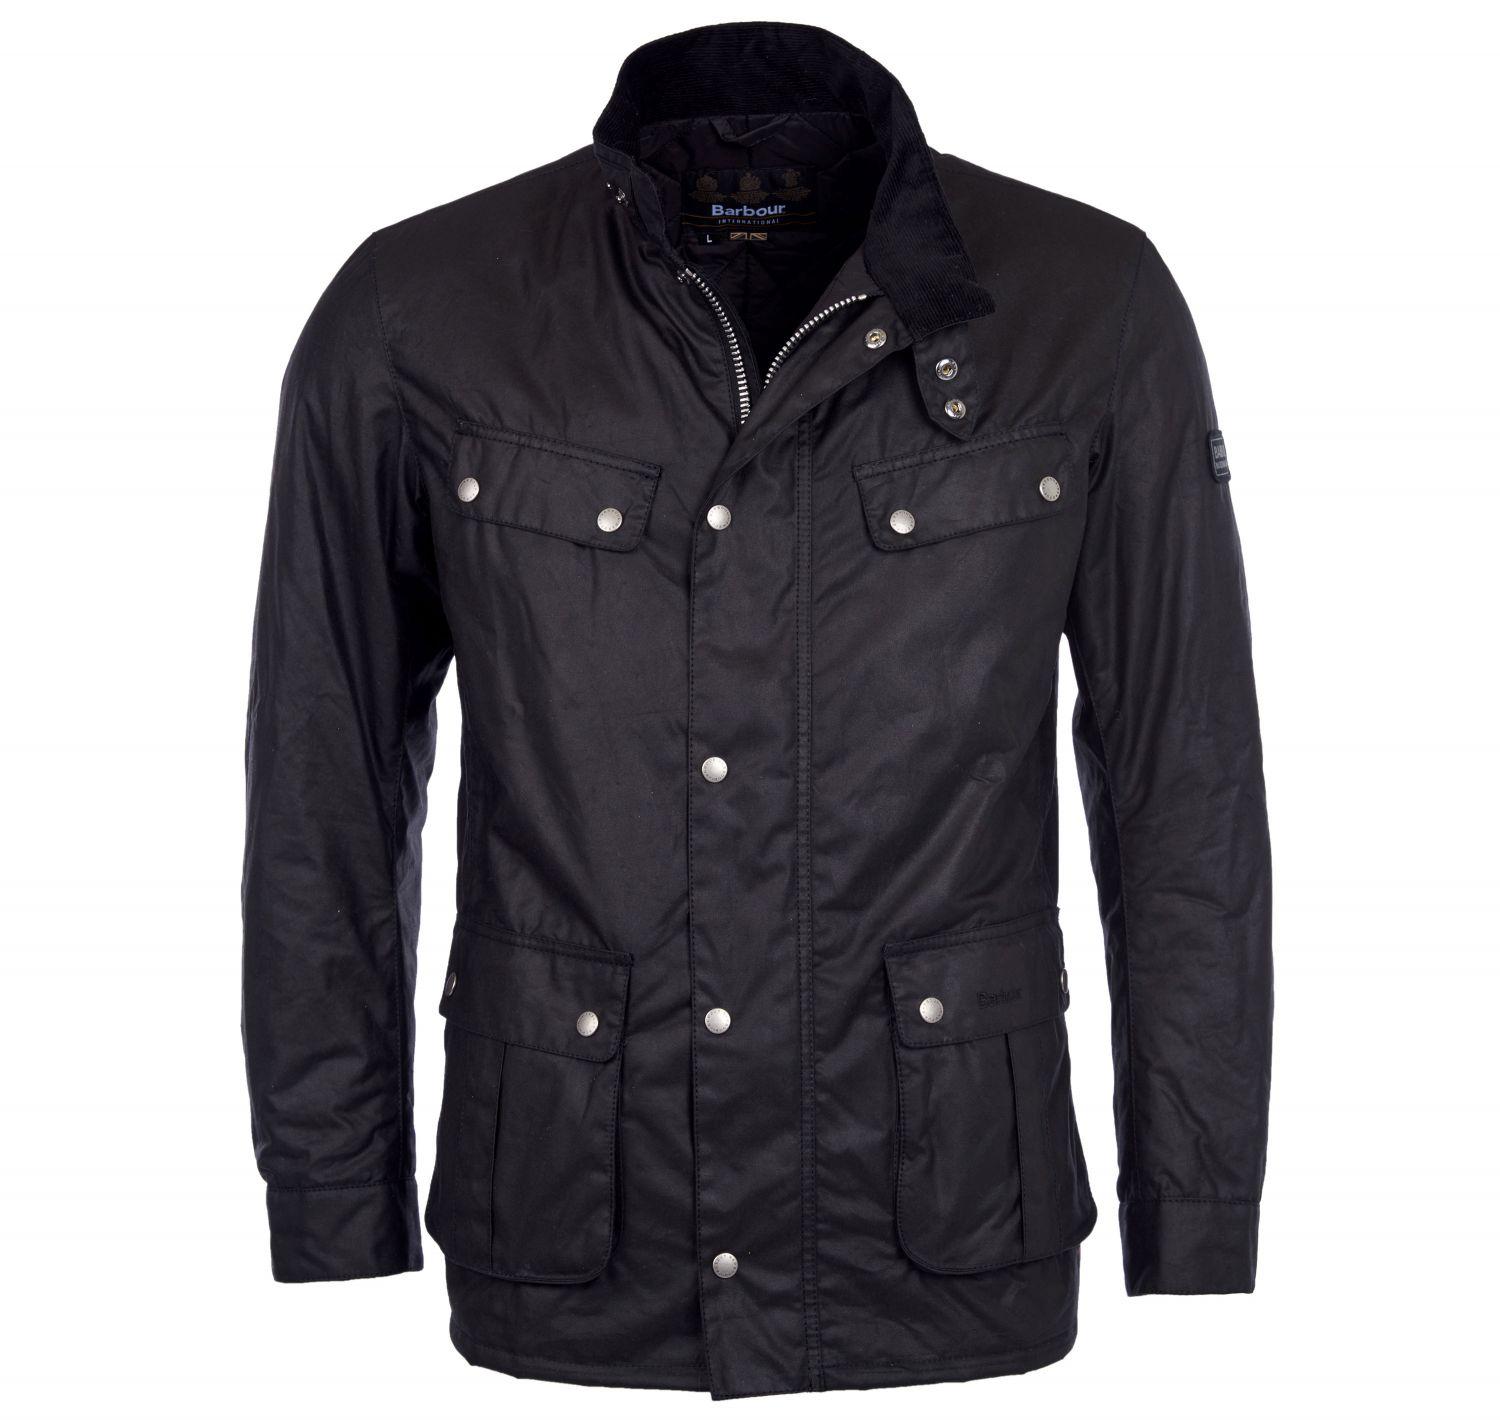 Barbour Black International Duke Waxed Jacket in Black for Men - Lyst